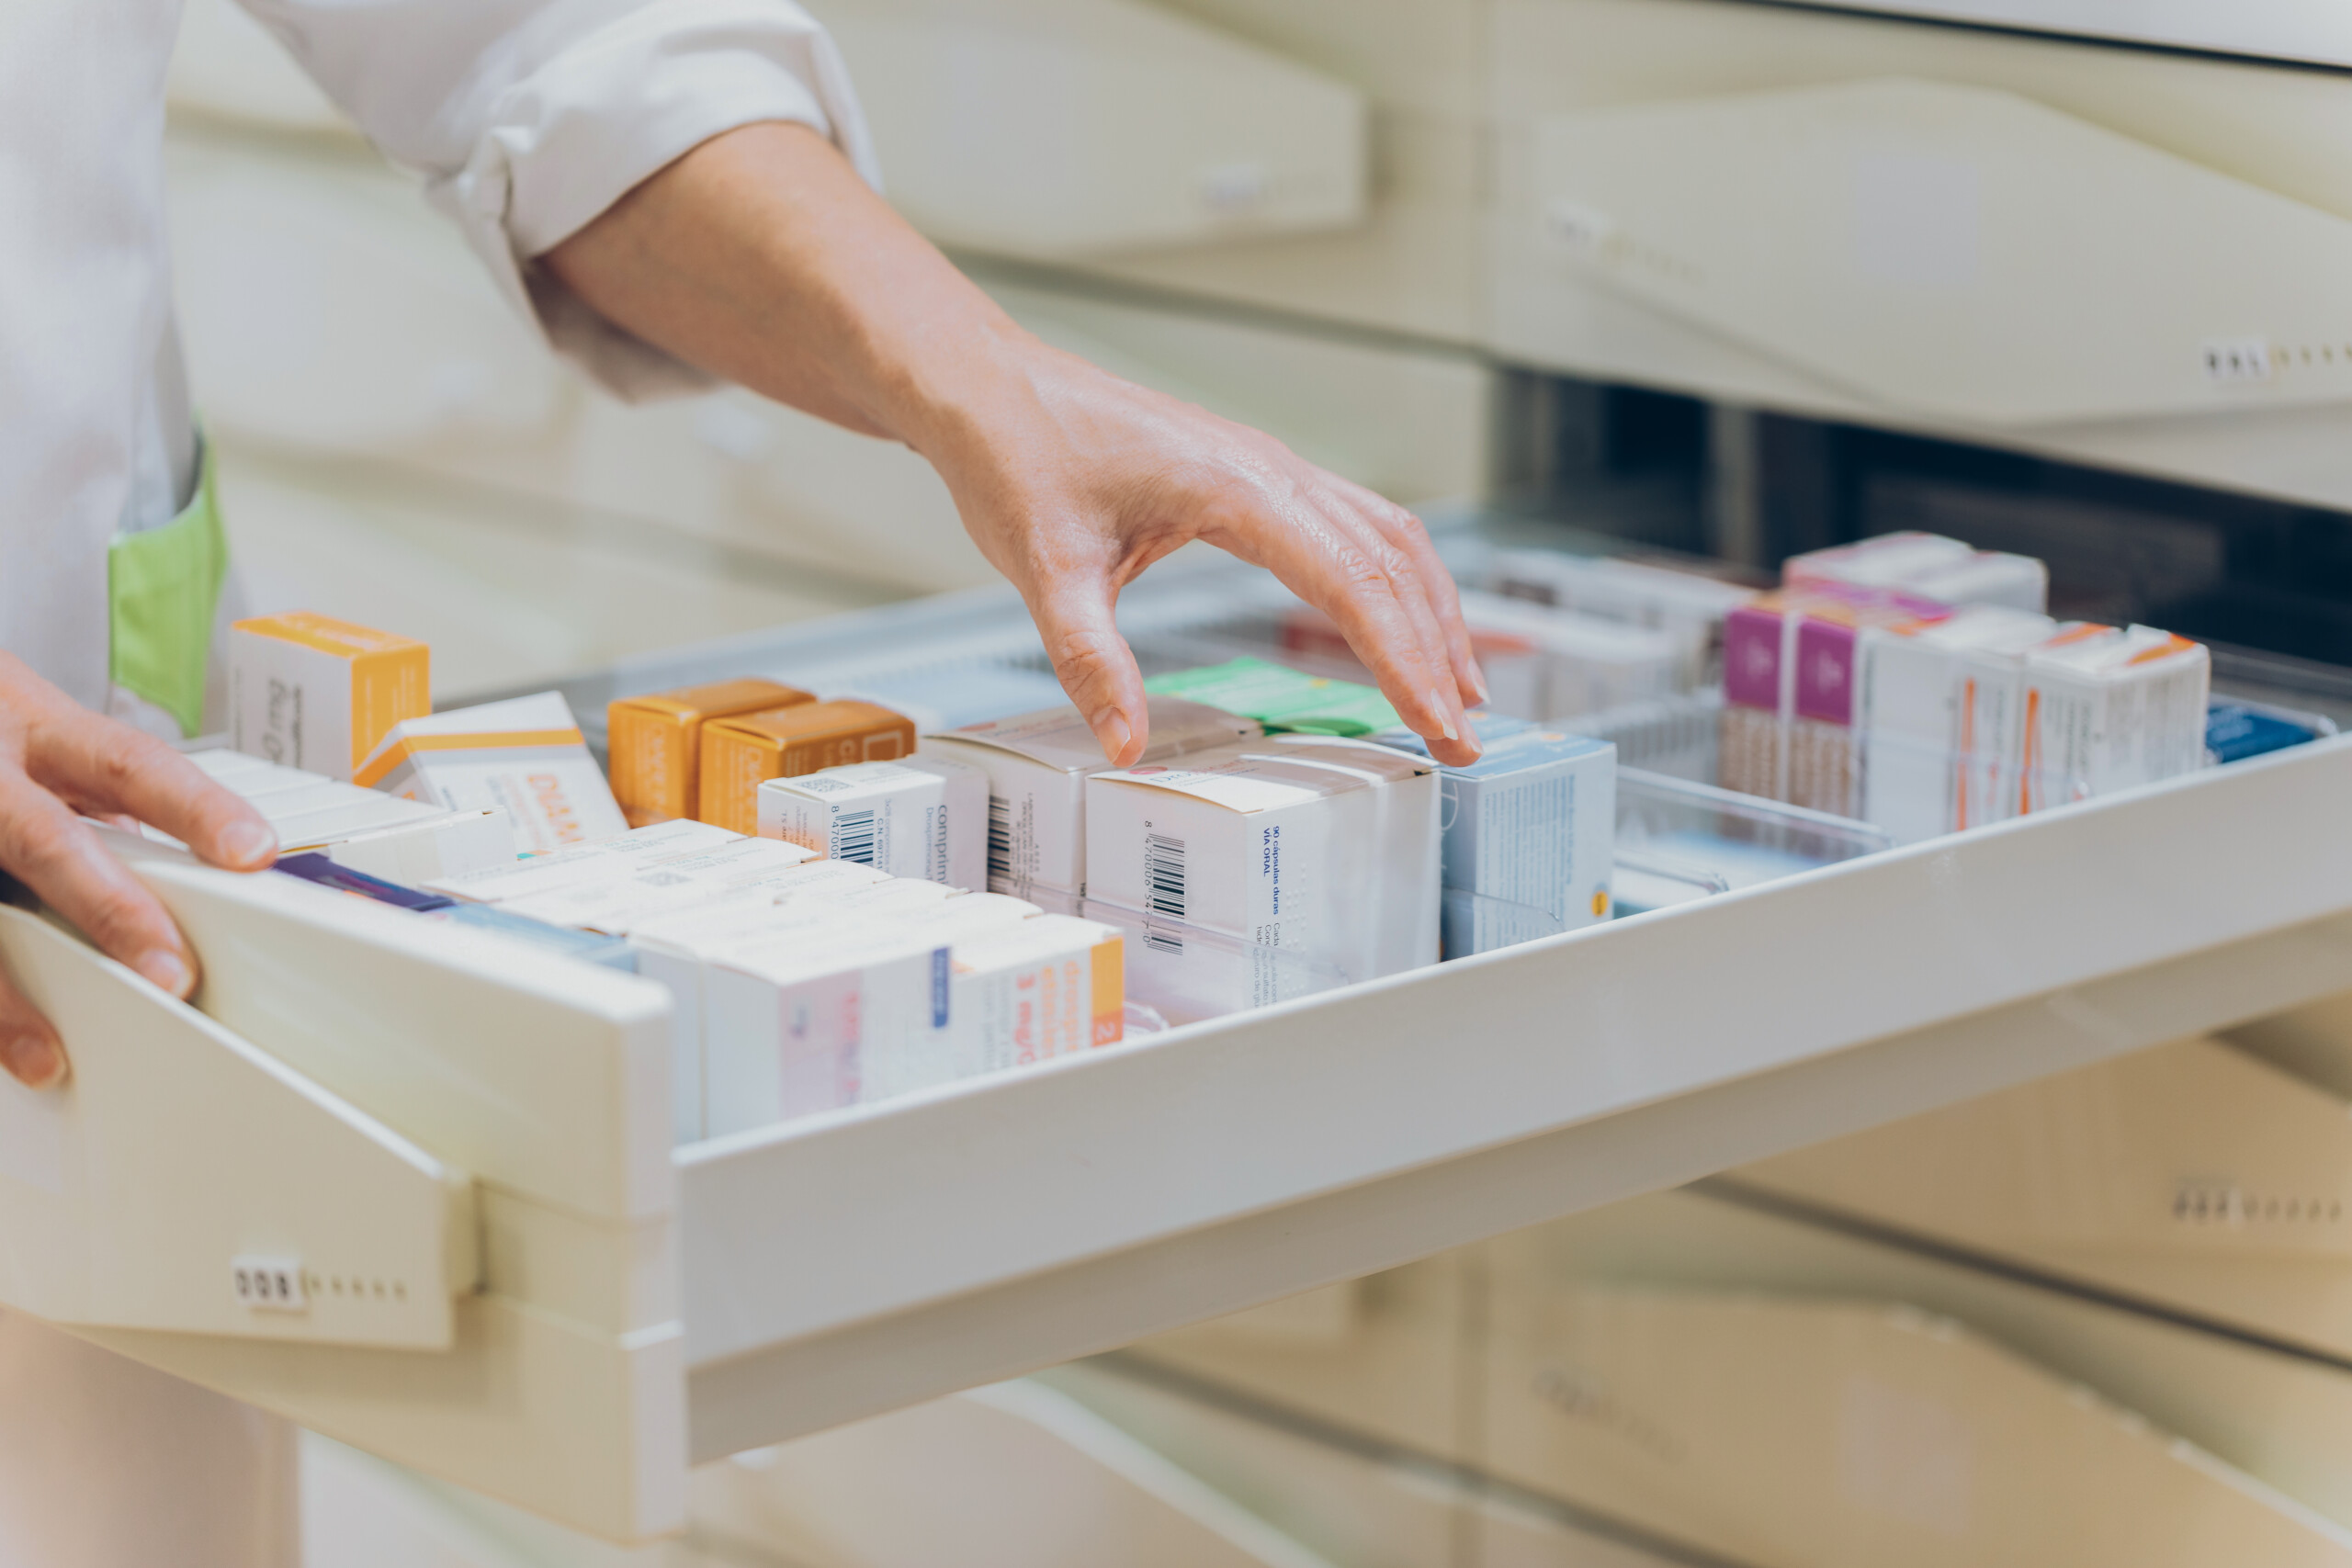 Pharmacist hand taking medication from drawer